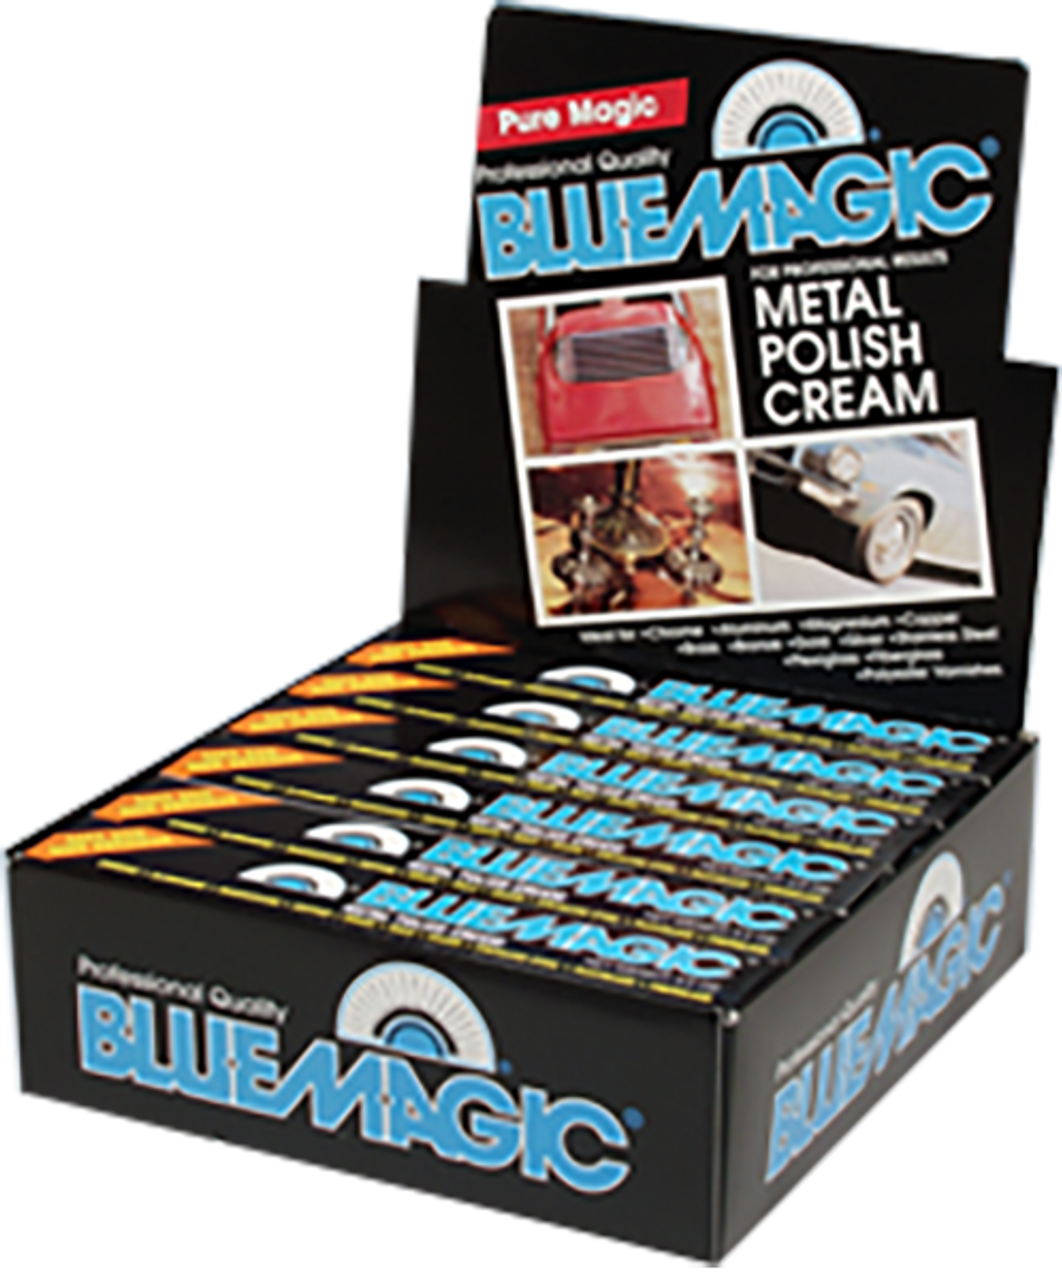 Twin Flag Garage- Blue Magic VS Brasso - Battle of the Metal Polish 